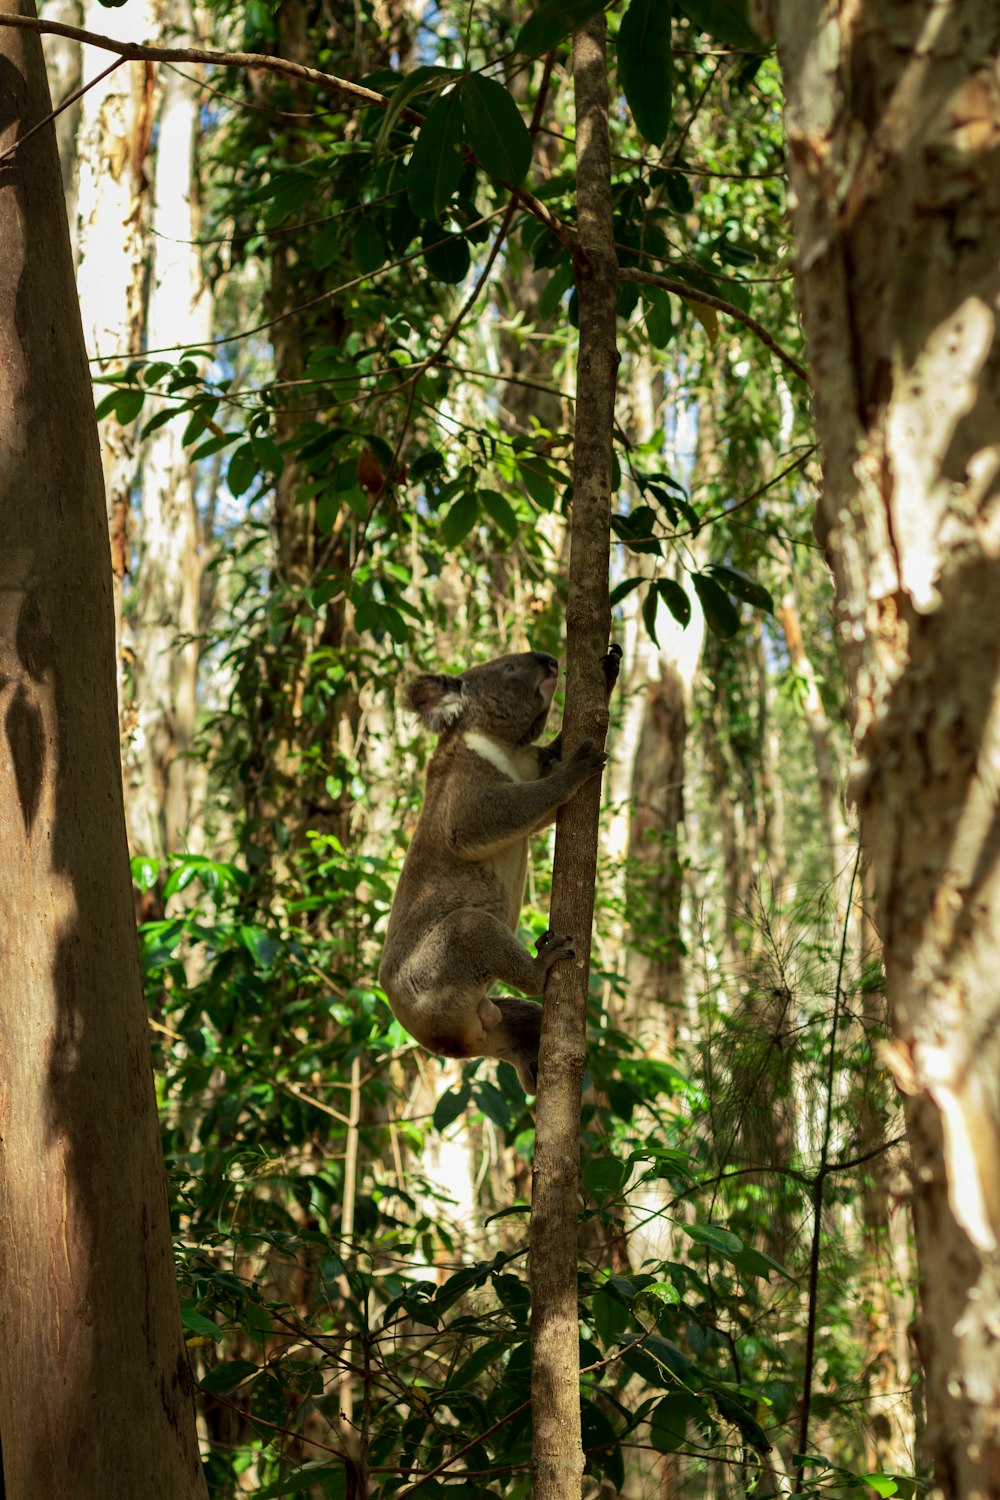 a koala climbing a tree in a forest